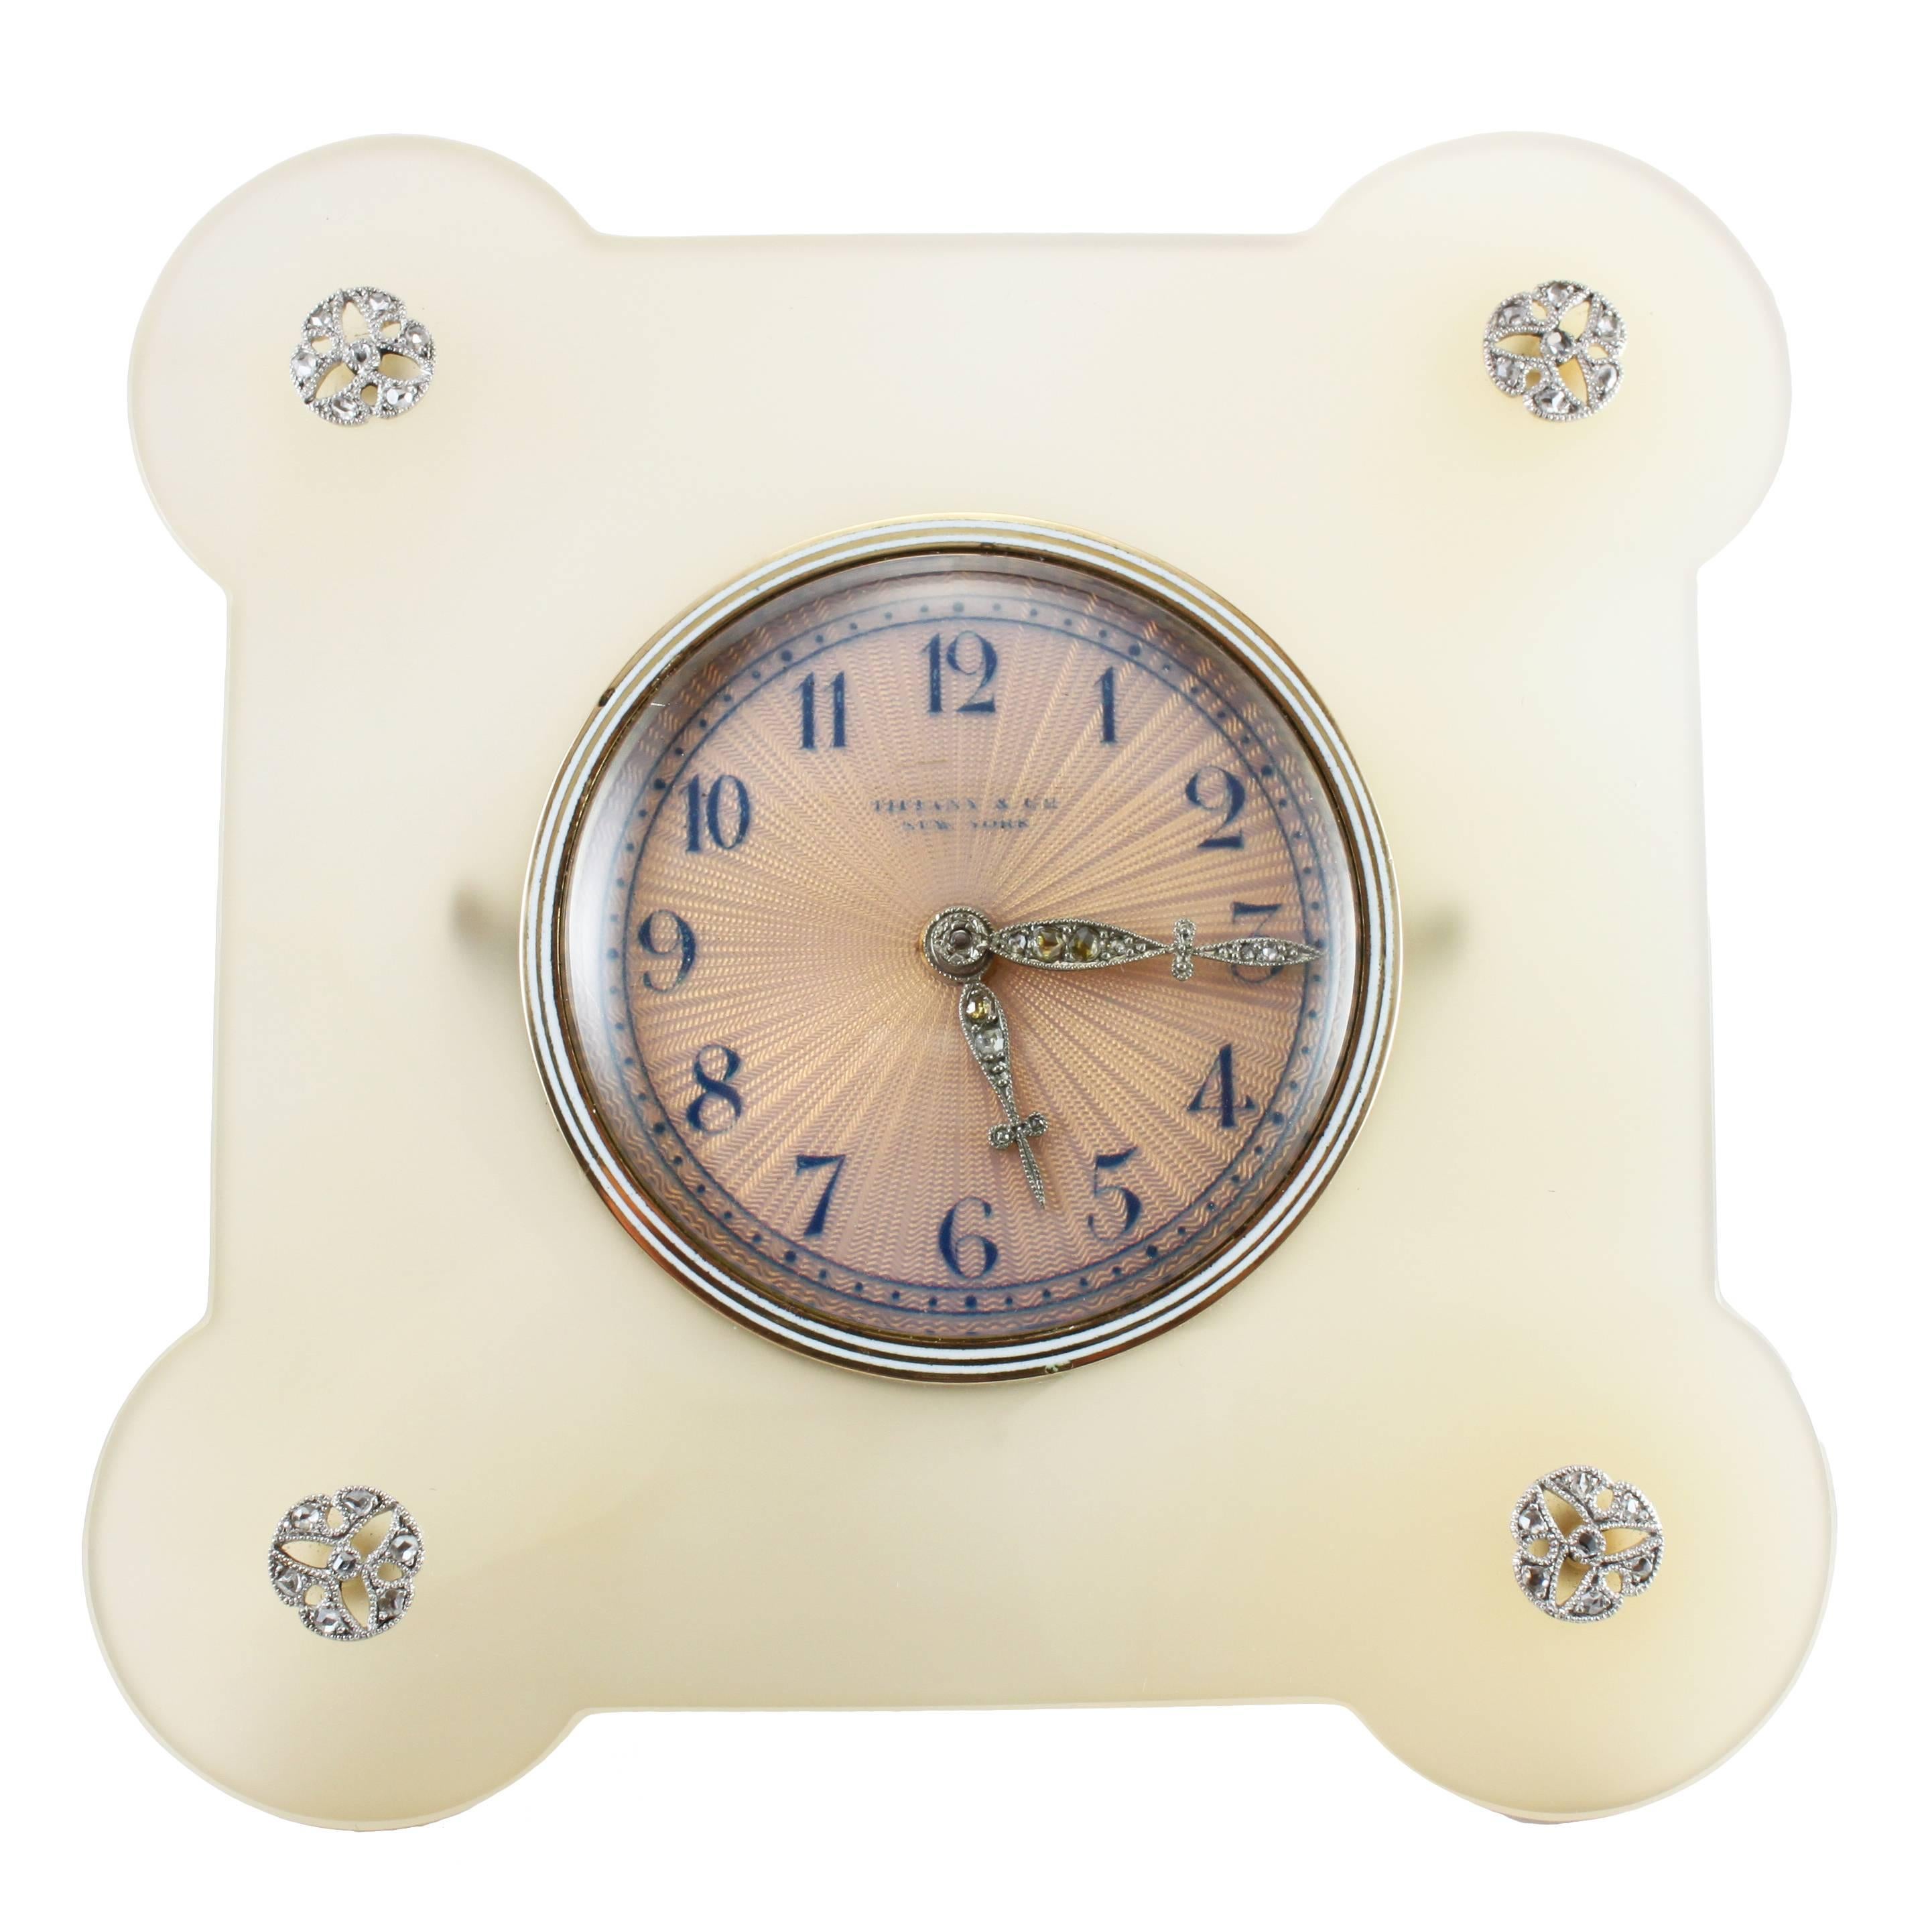 Tiffany & Co. Art Deco Enamel Agate Diamond Desk Clock